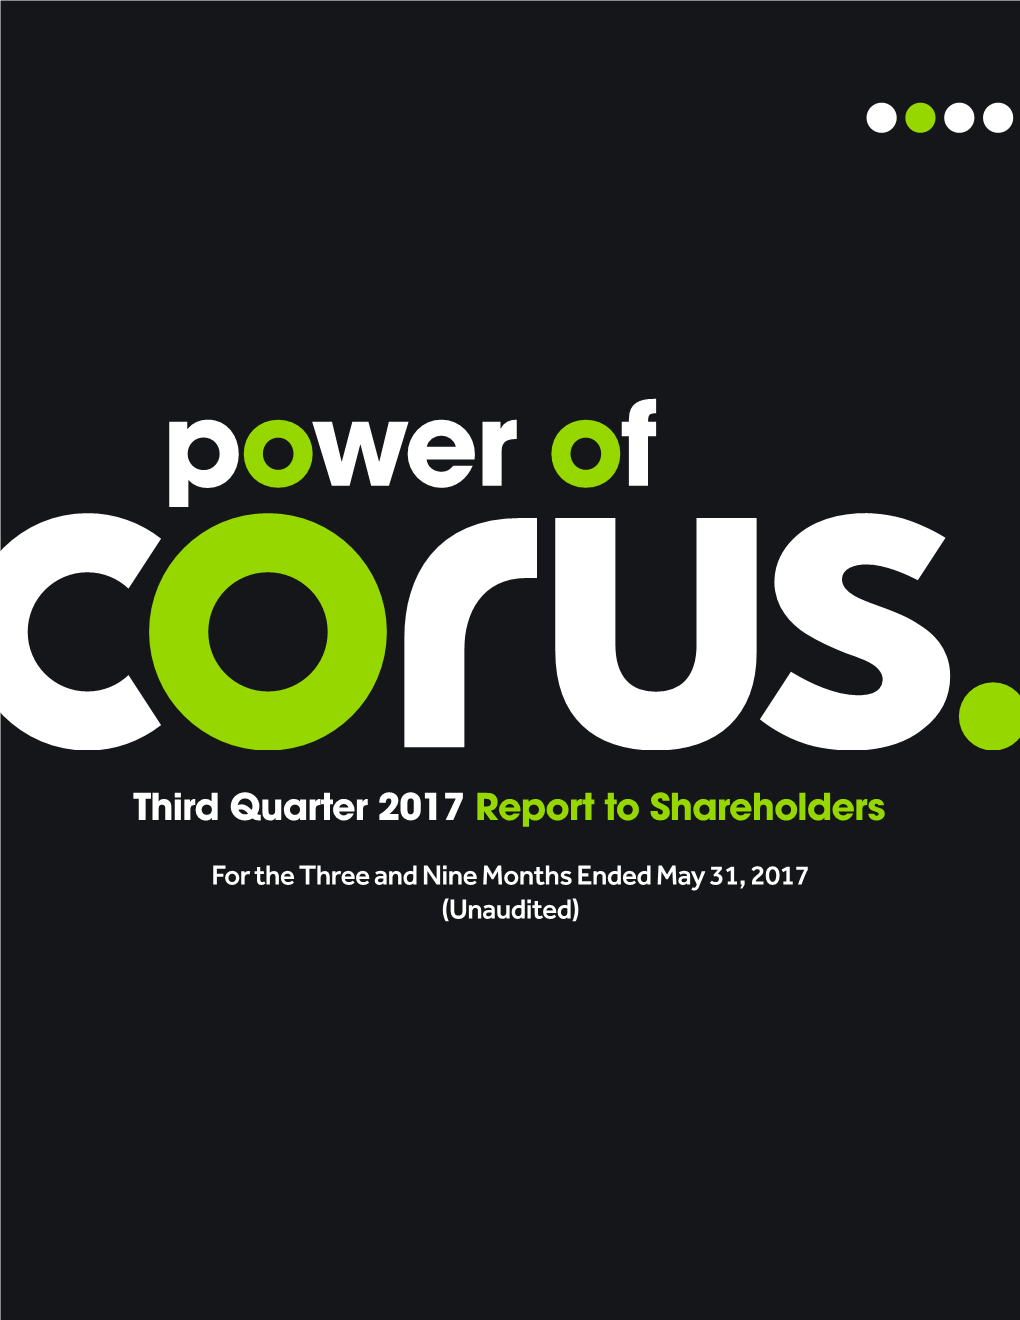 Third Quarter 2017 Report to Shareholders